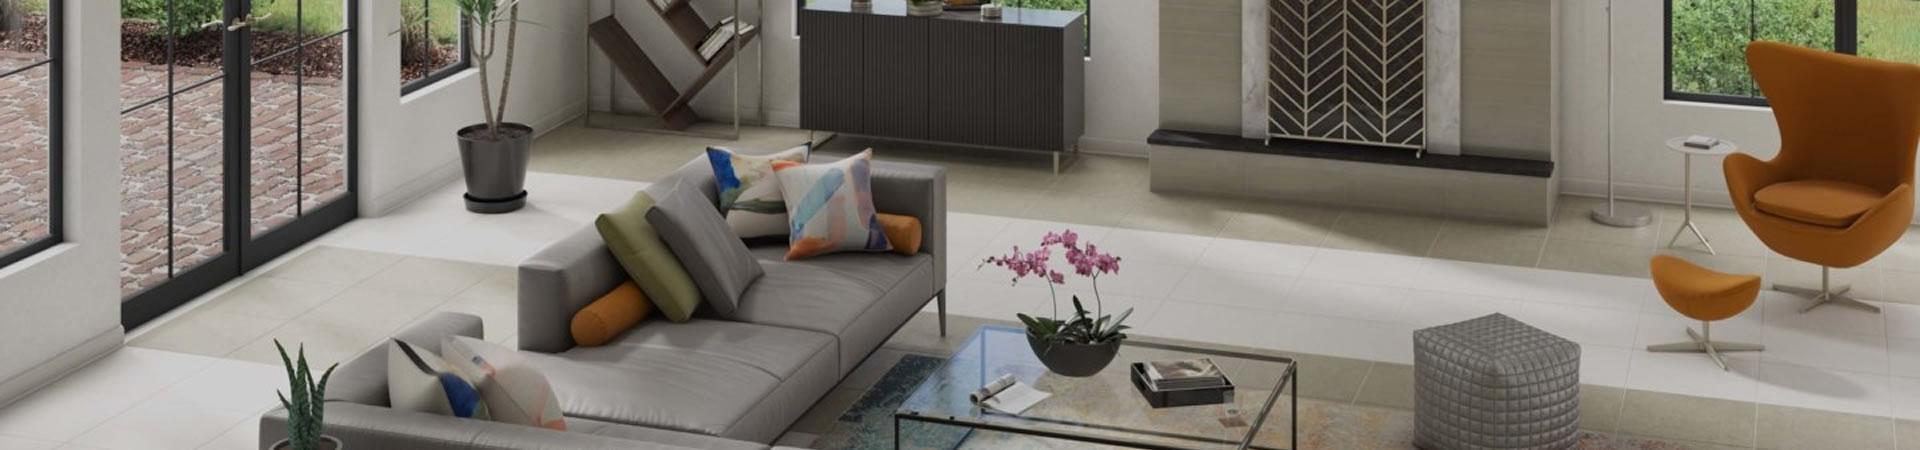 Room scene with CLEO limestone composite flooring